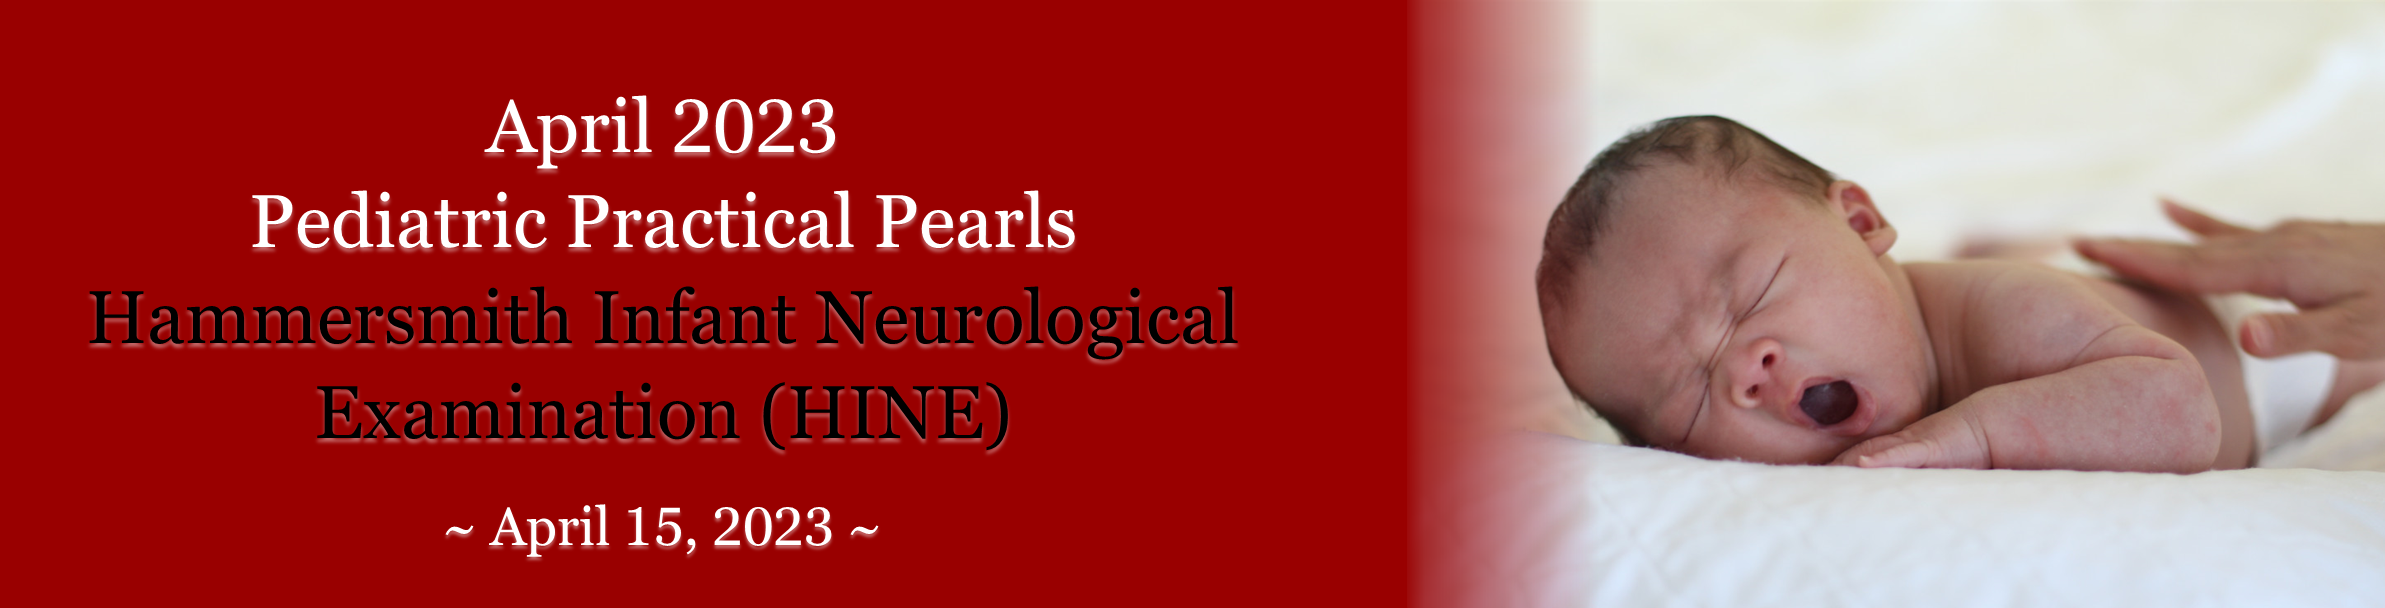 April 2023 Pediatric Practical Pearls: Hammersmith Infant Neurological Examination Training Banner